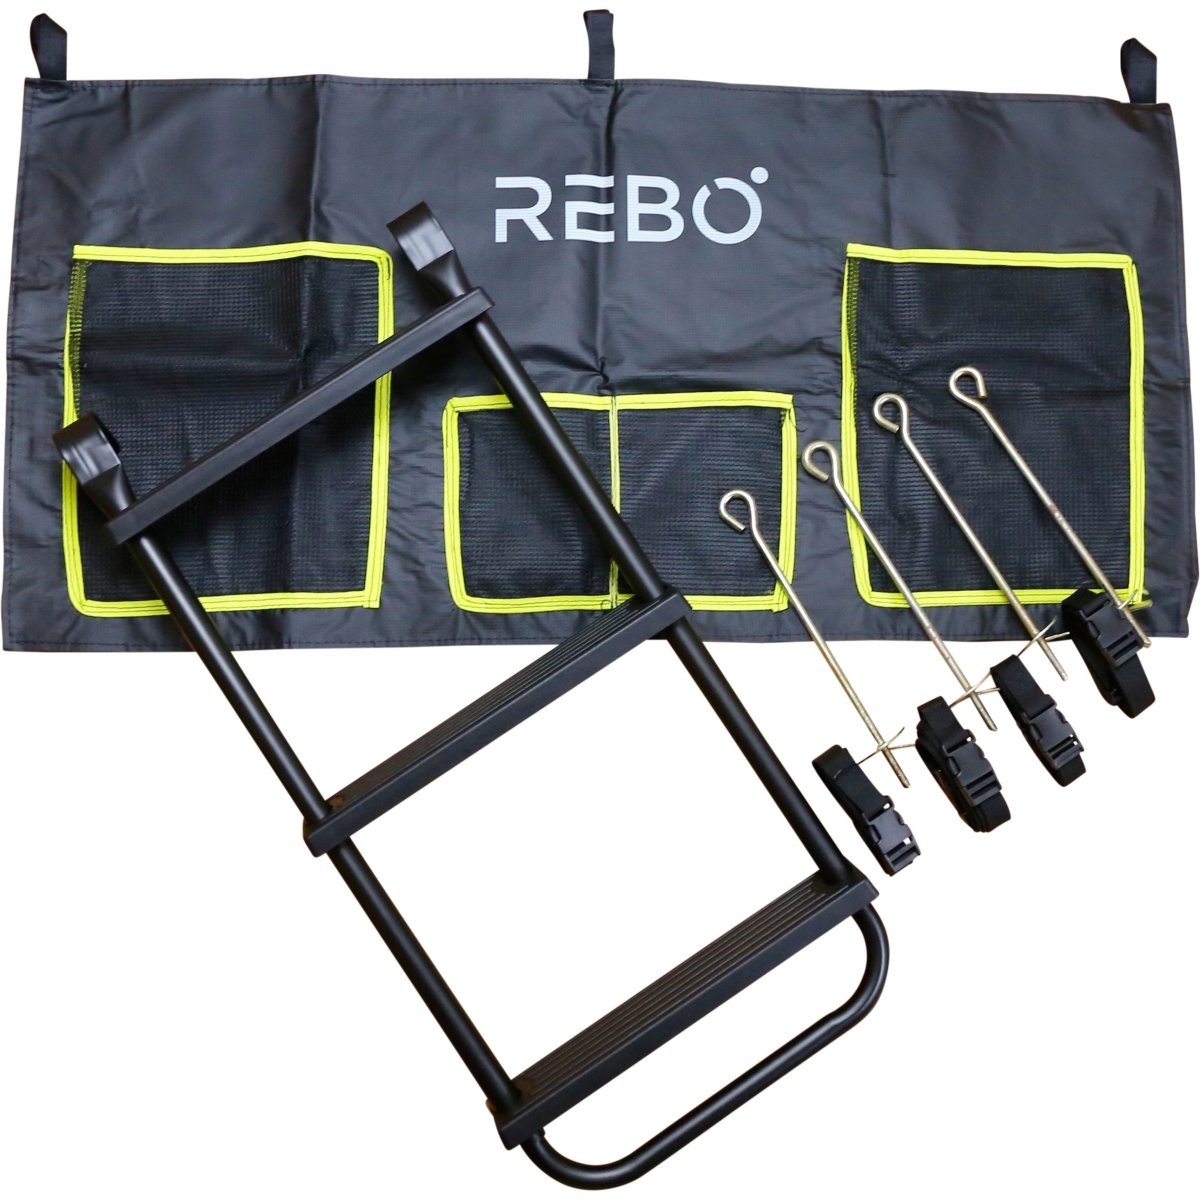 Rebo Universal Trampoline Accessory Pack